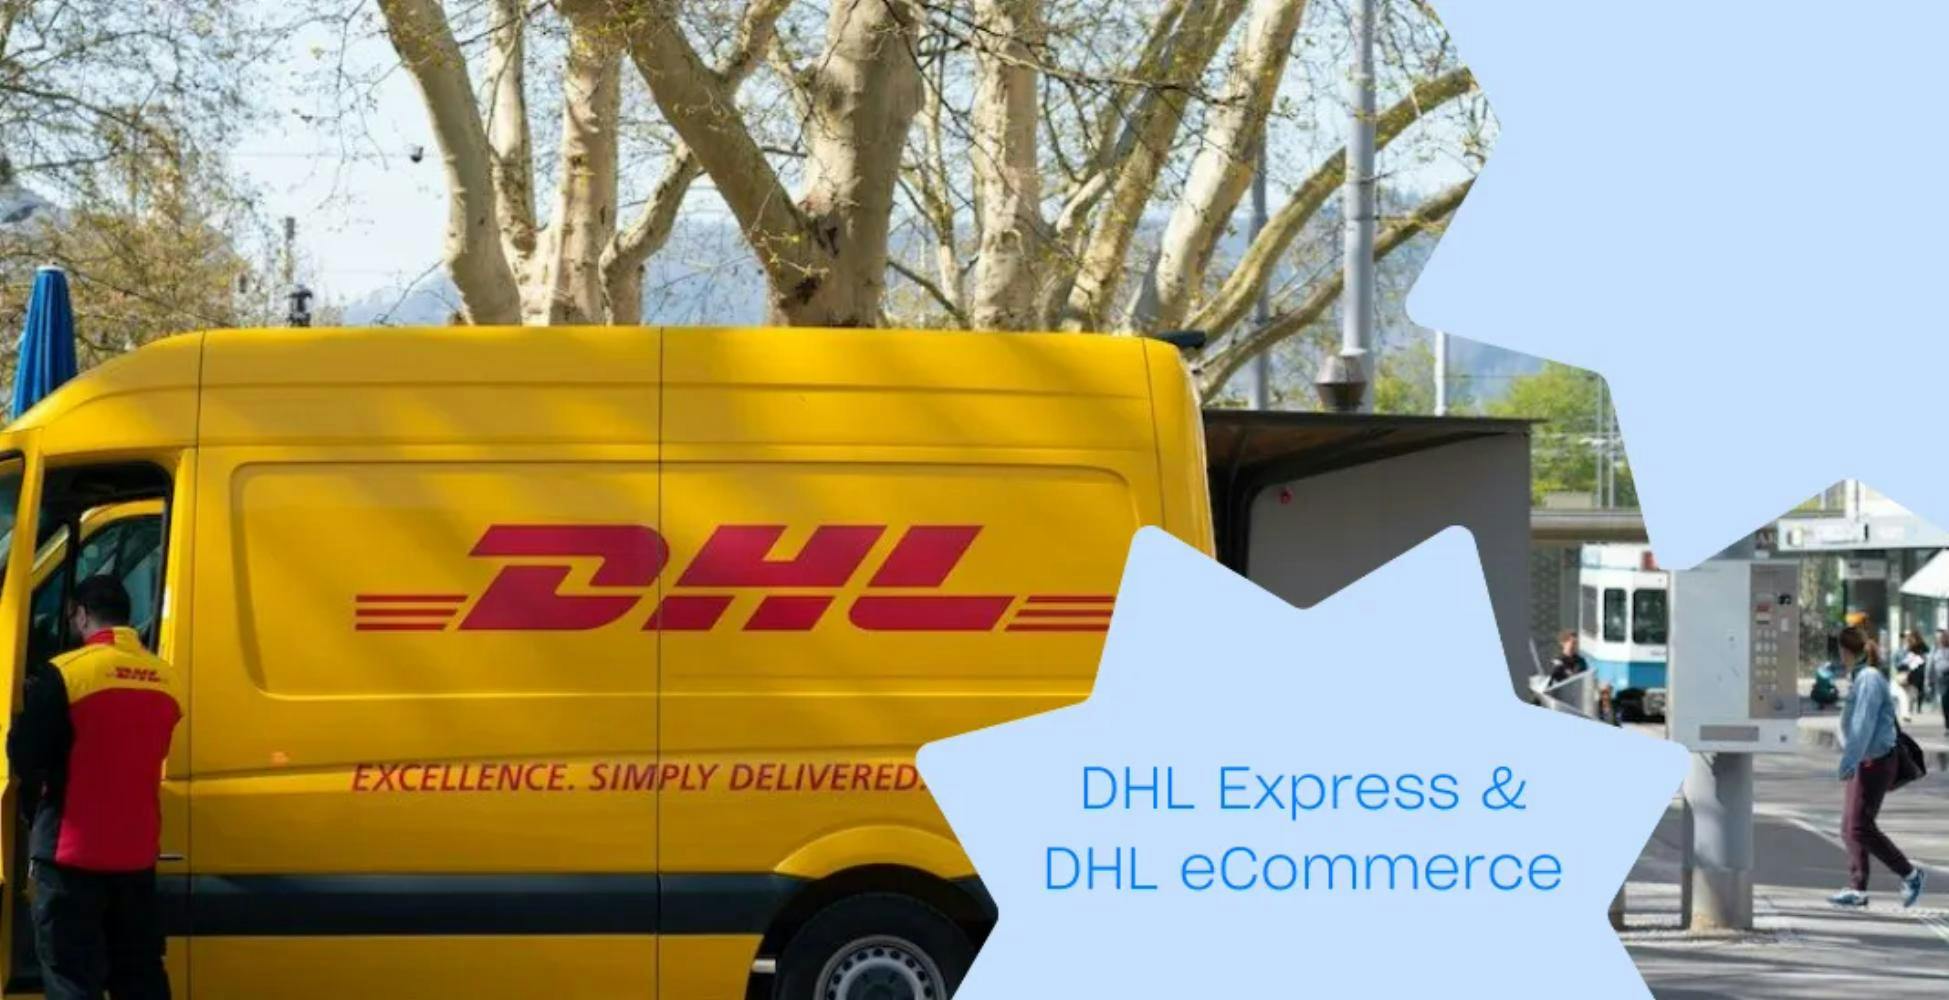 dhl express and dhl ecommerce - blog header